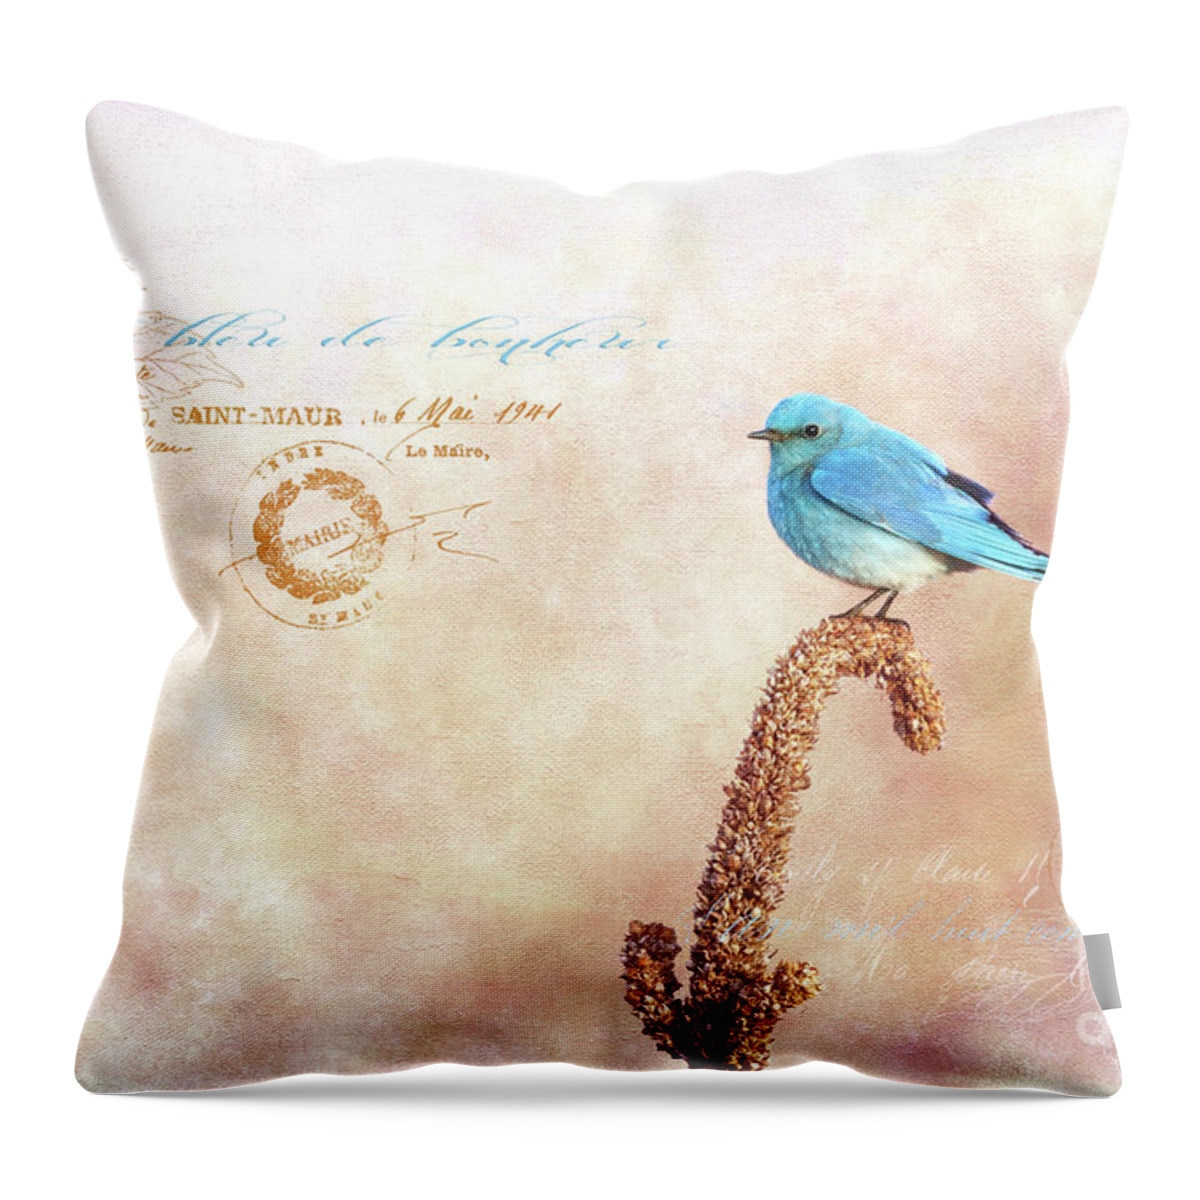 Beve Brown-clark Throw Pillow featuring the photograph Oiseau bleu de bonheur by Beve Brown-Clark Photography